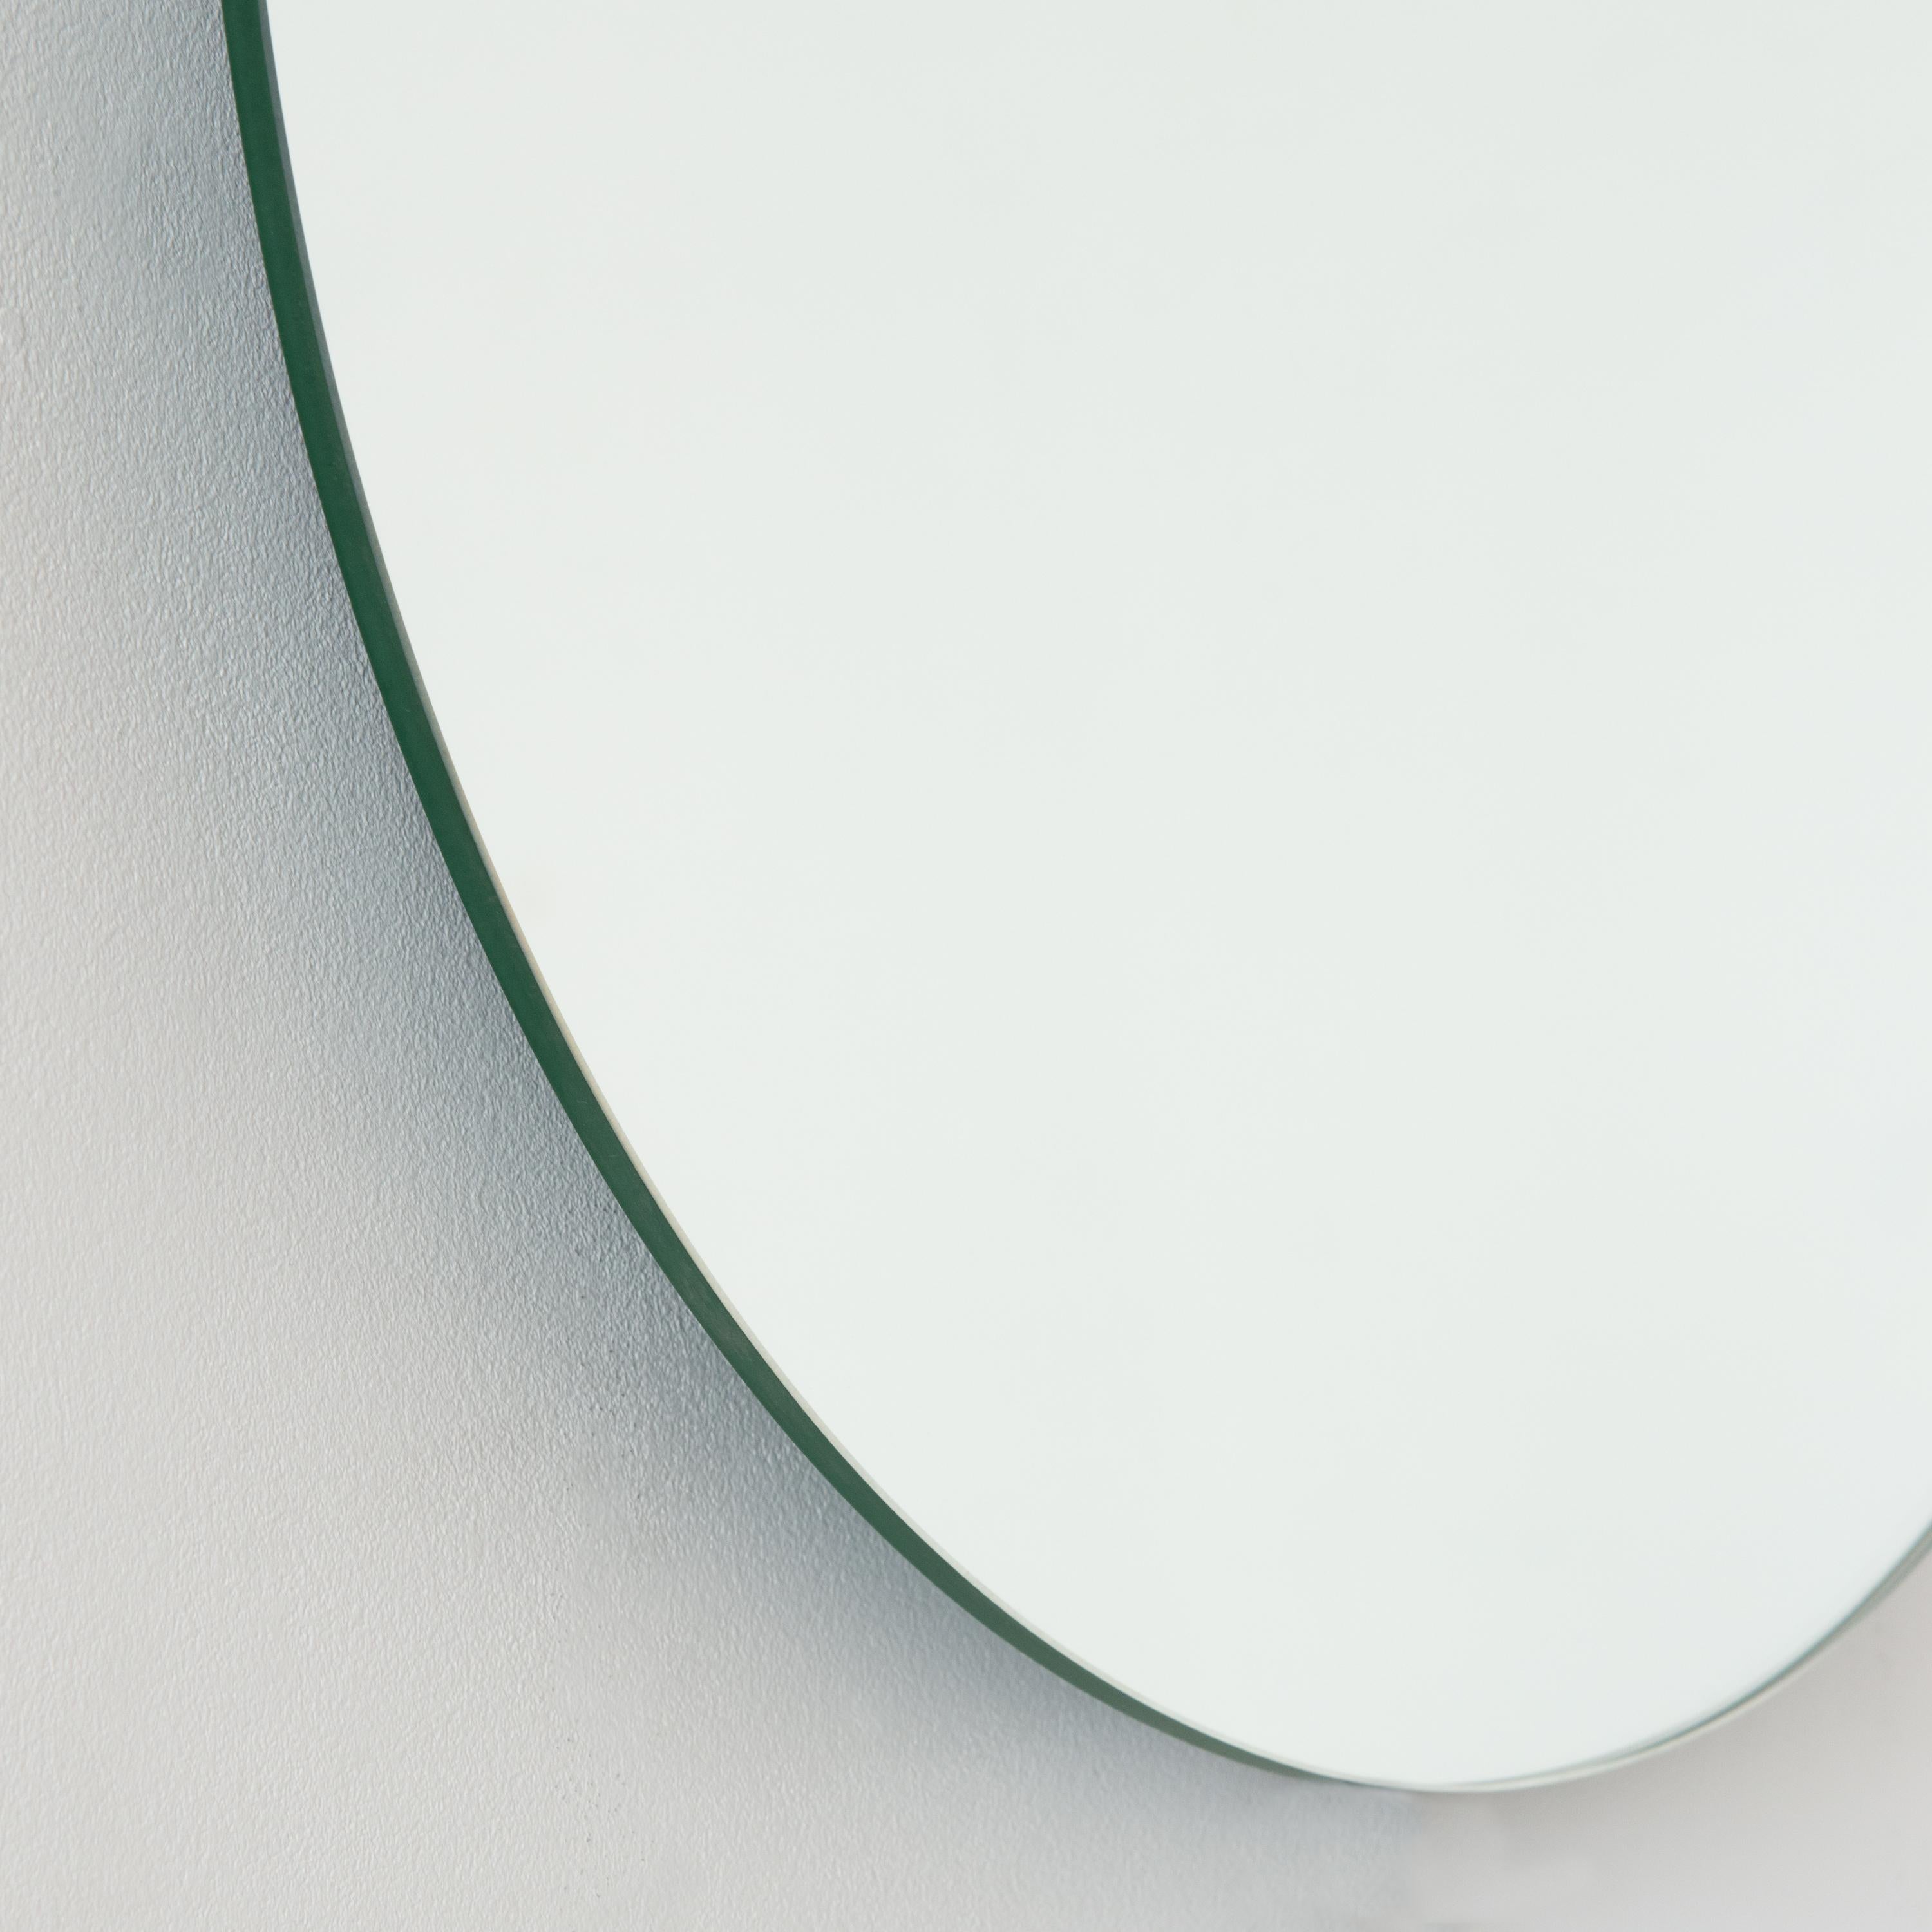 Orbis Blue Tinted Round Contemporary Frameless Mirror, Regular For Sale 2